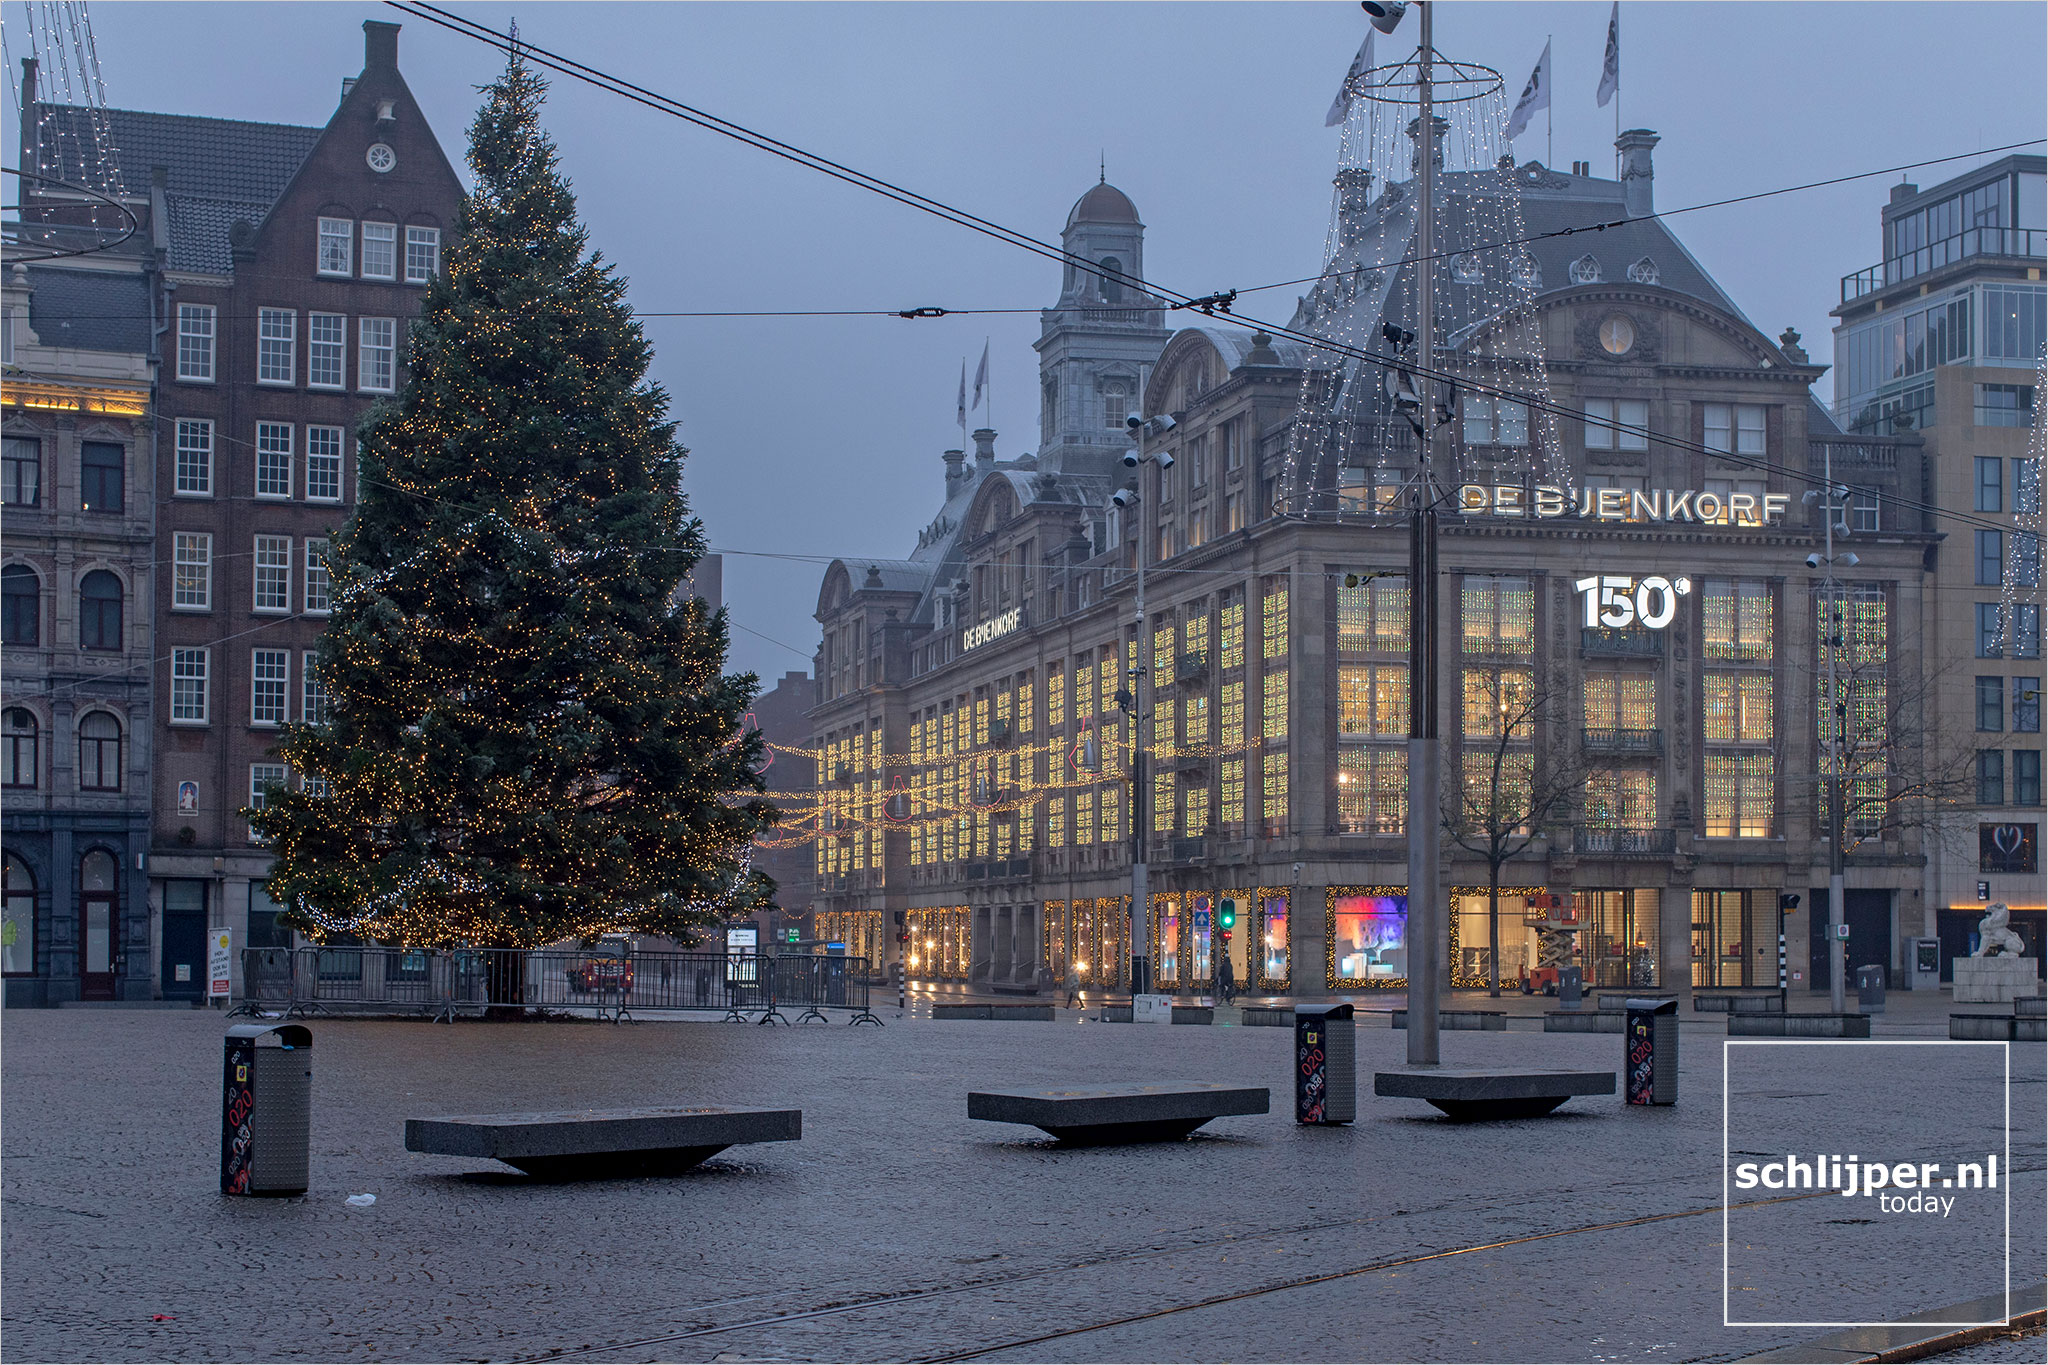 The Netherlands, Amsterdam, 23 december 2020